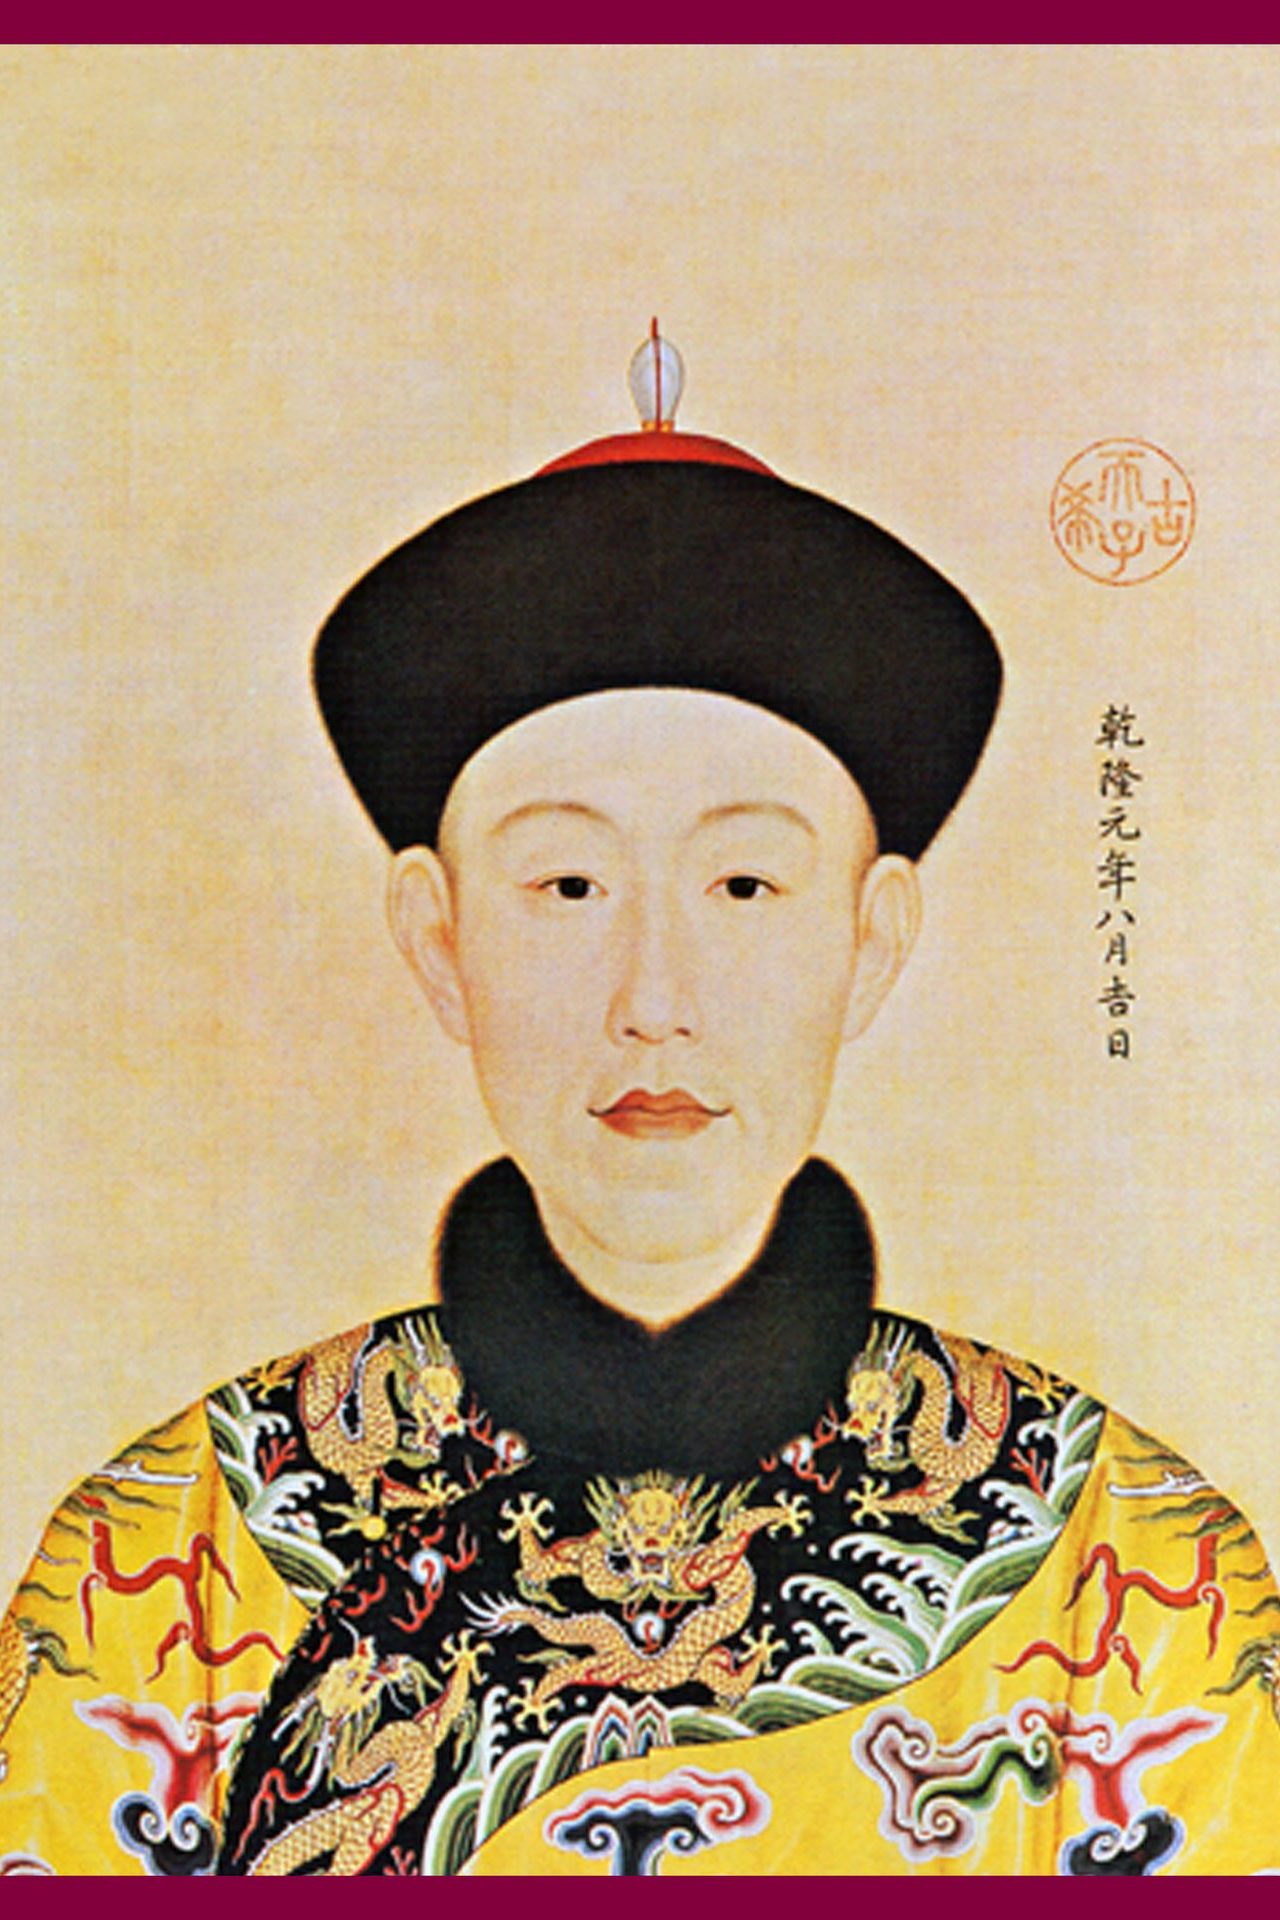 Qianlong (China, 60 years from 1735 to 1796)